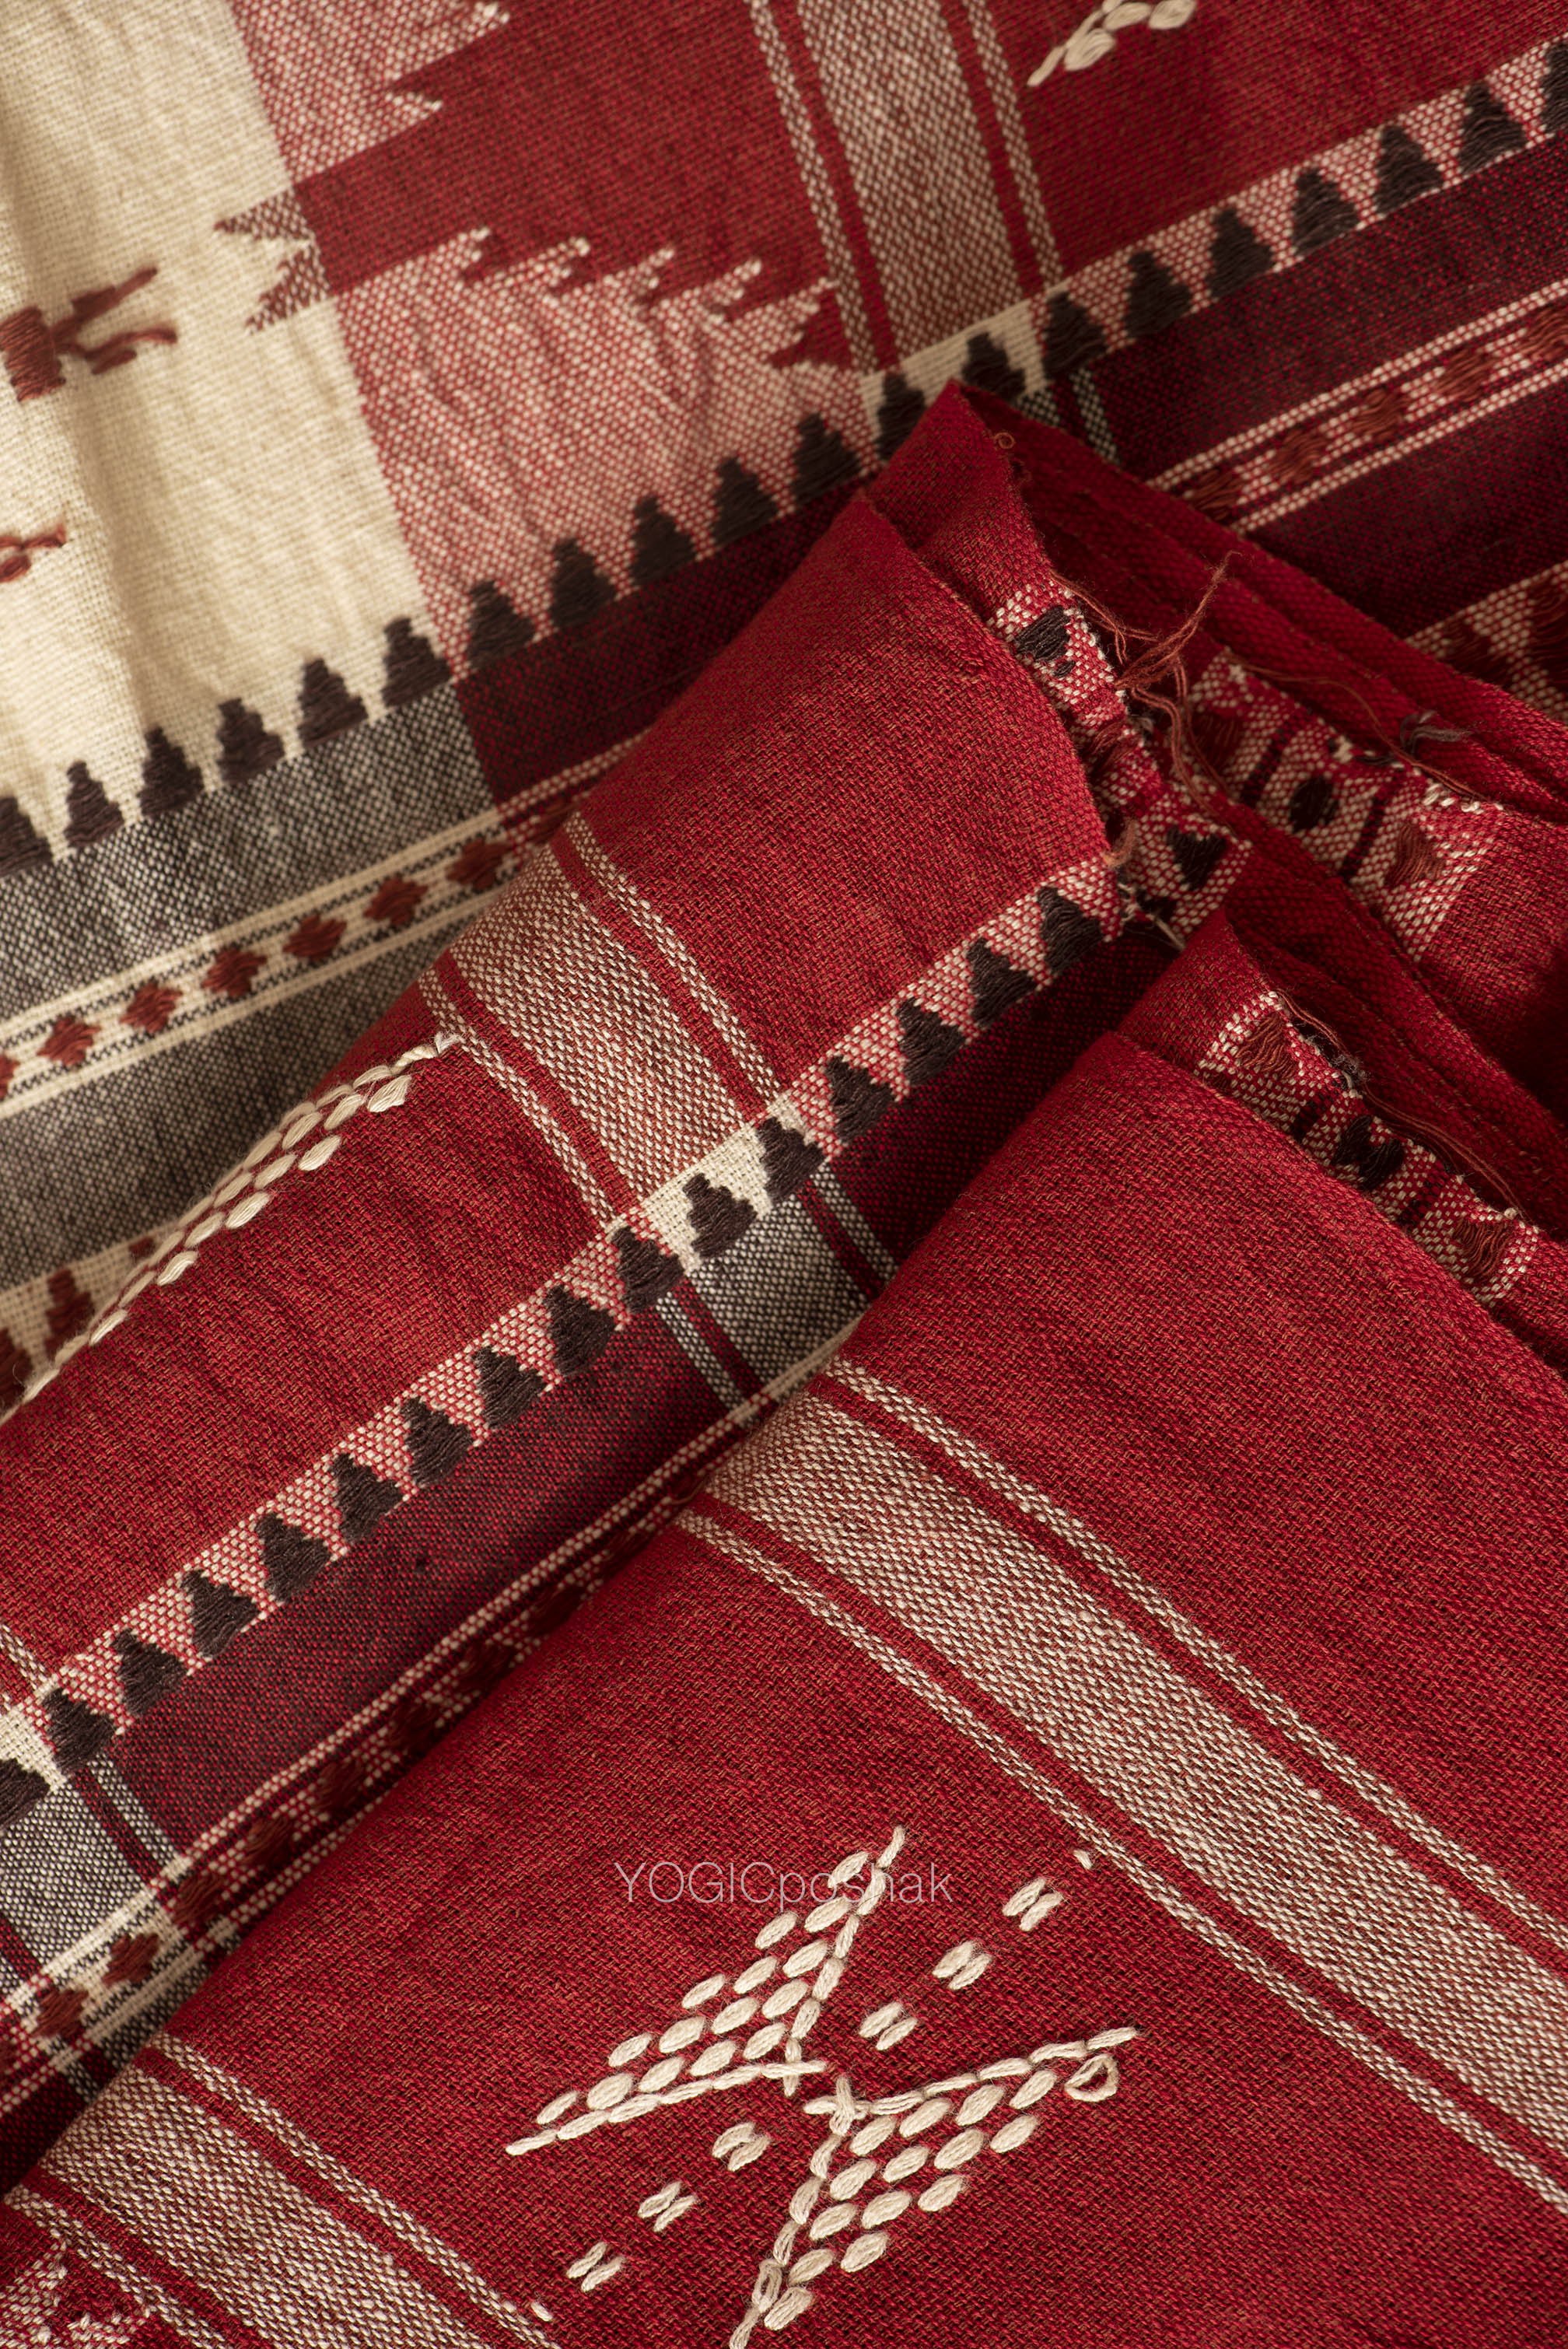 Kotpad handloom cotton saree | natural dyed | off white